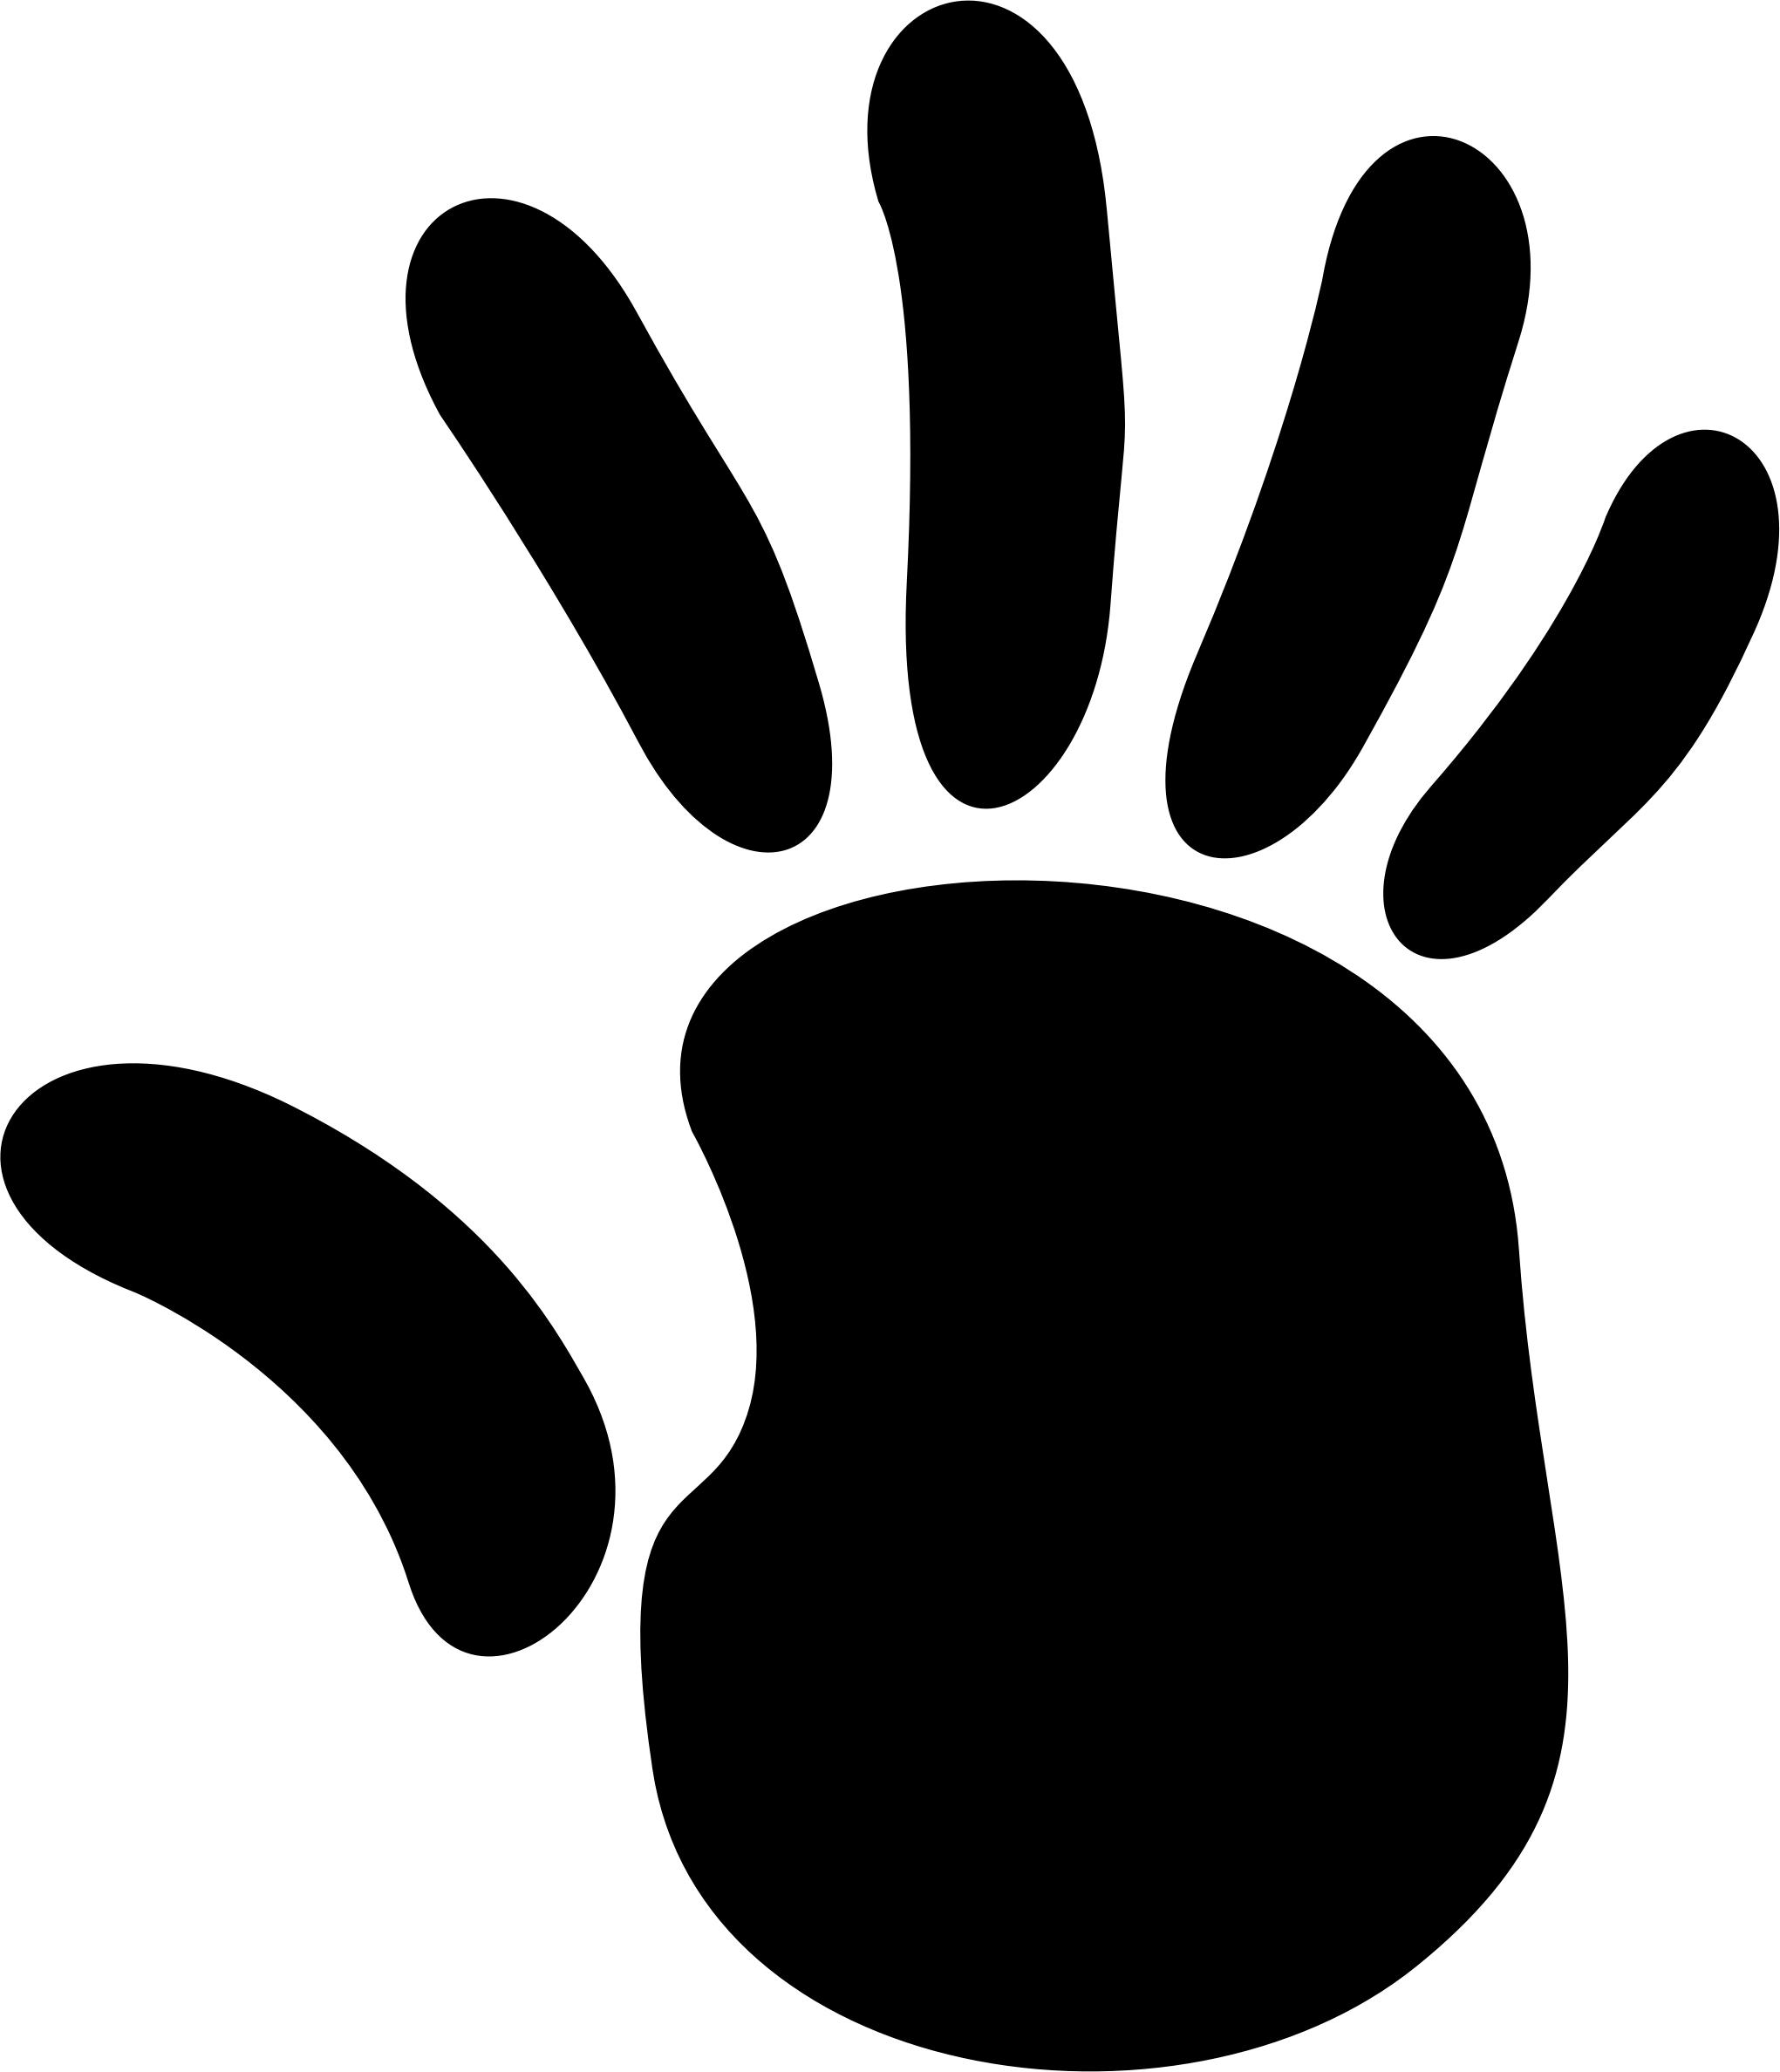 illustrator handprint symbol download